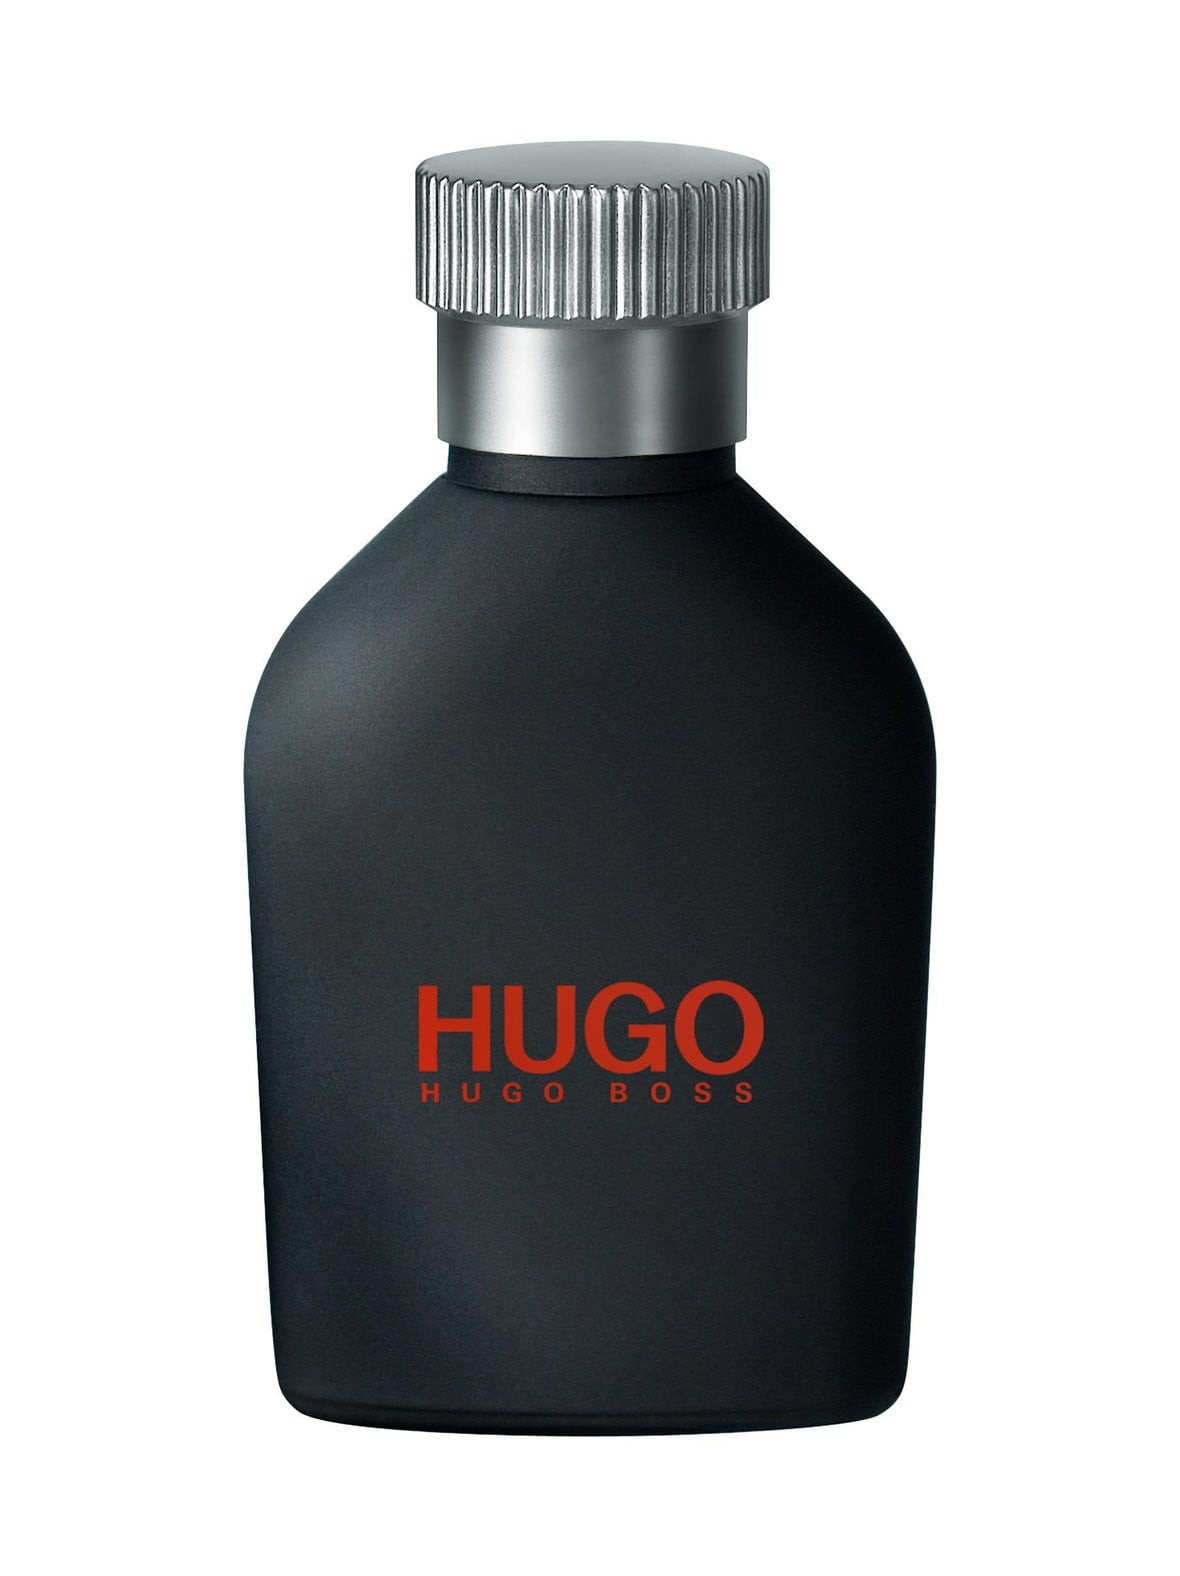 Hugo different. Hugo Boss just different 40 ml. Туалетная вода Hugo Boss 40 ml. Туалетная вода Hugo Boss мужская 40ml. Hugo Boss Hugo just different.